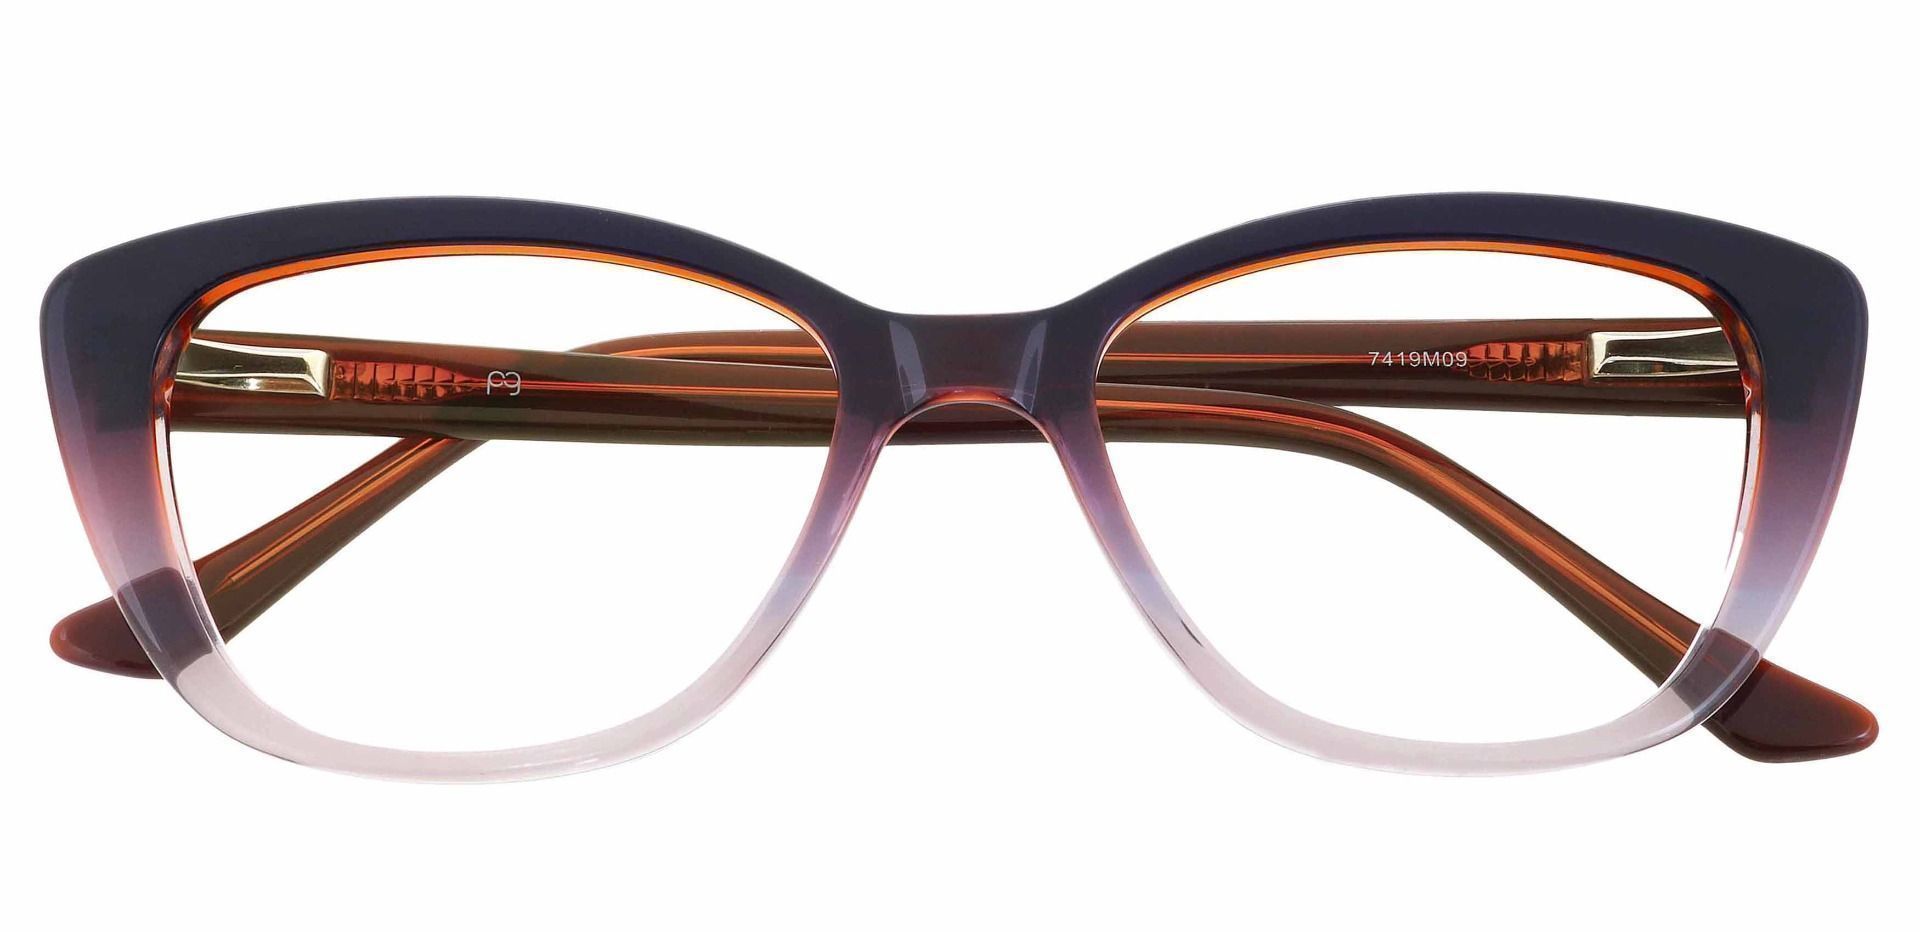 Athena Cat-Eye Progressive Glasses - Multi Color